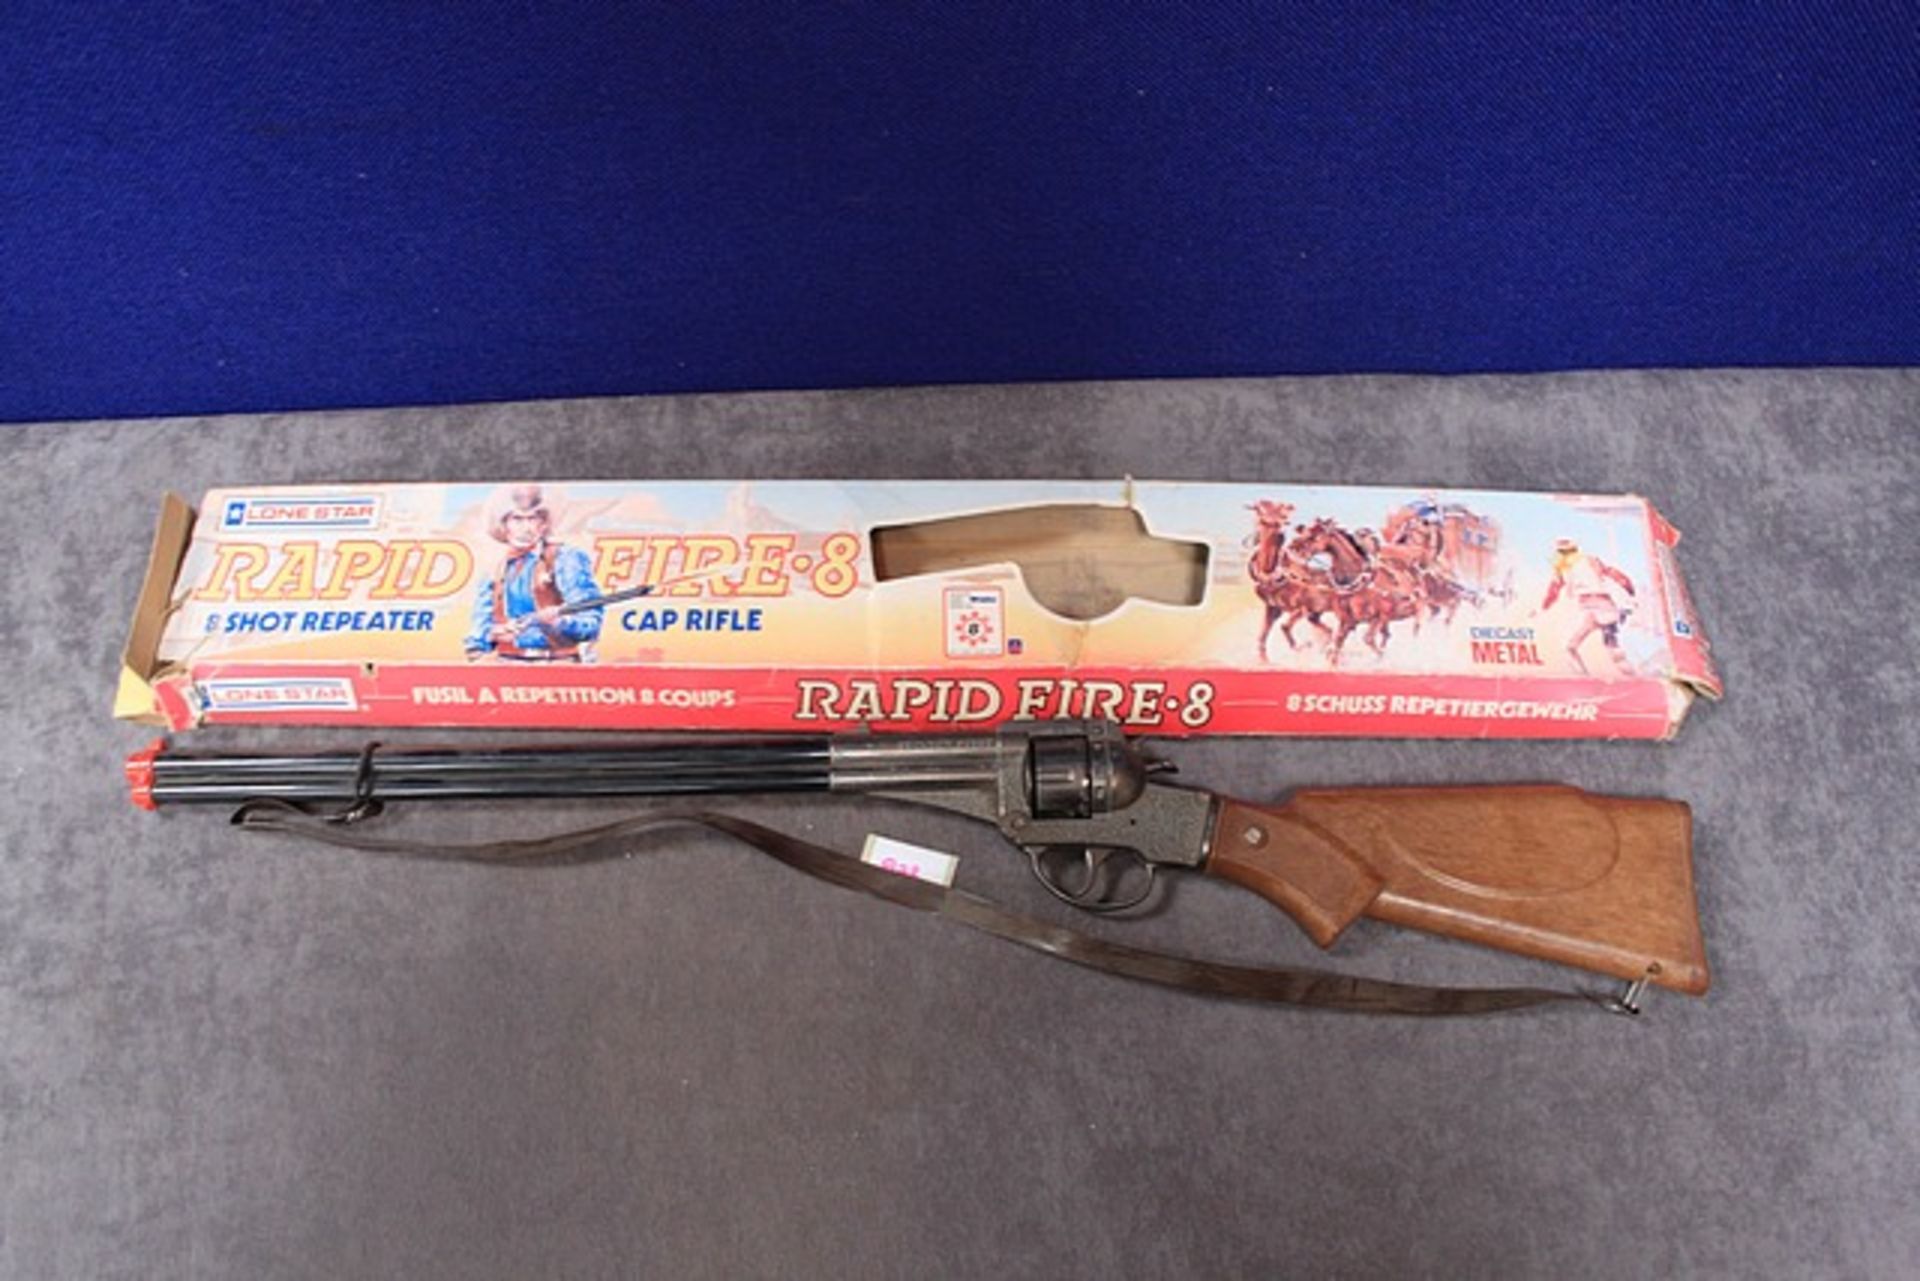 Lonestar Diecast Rapid Fire 8 Shot Repeater Cap Rifle In Box